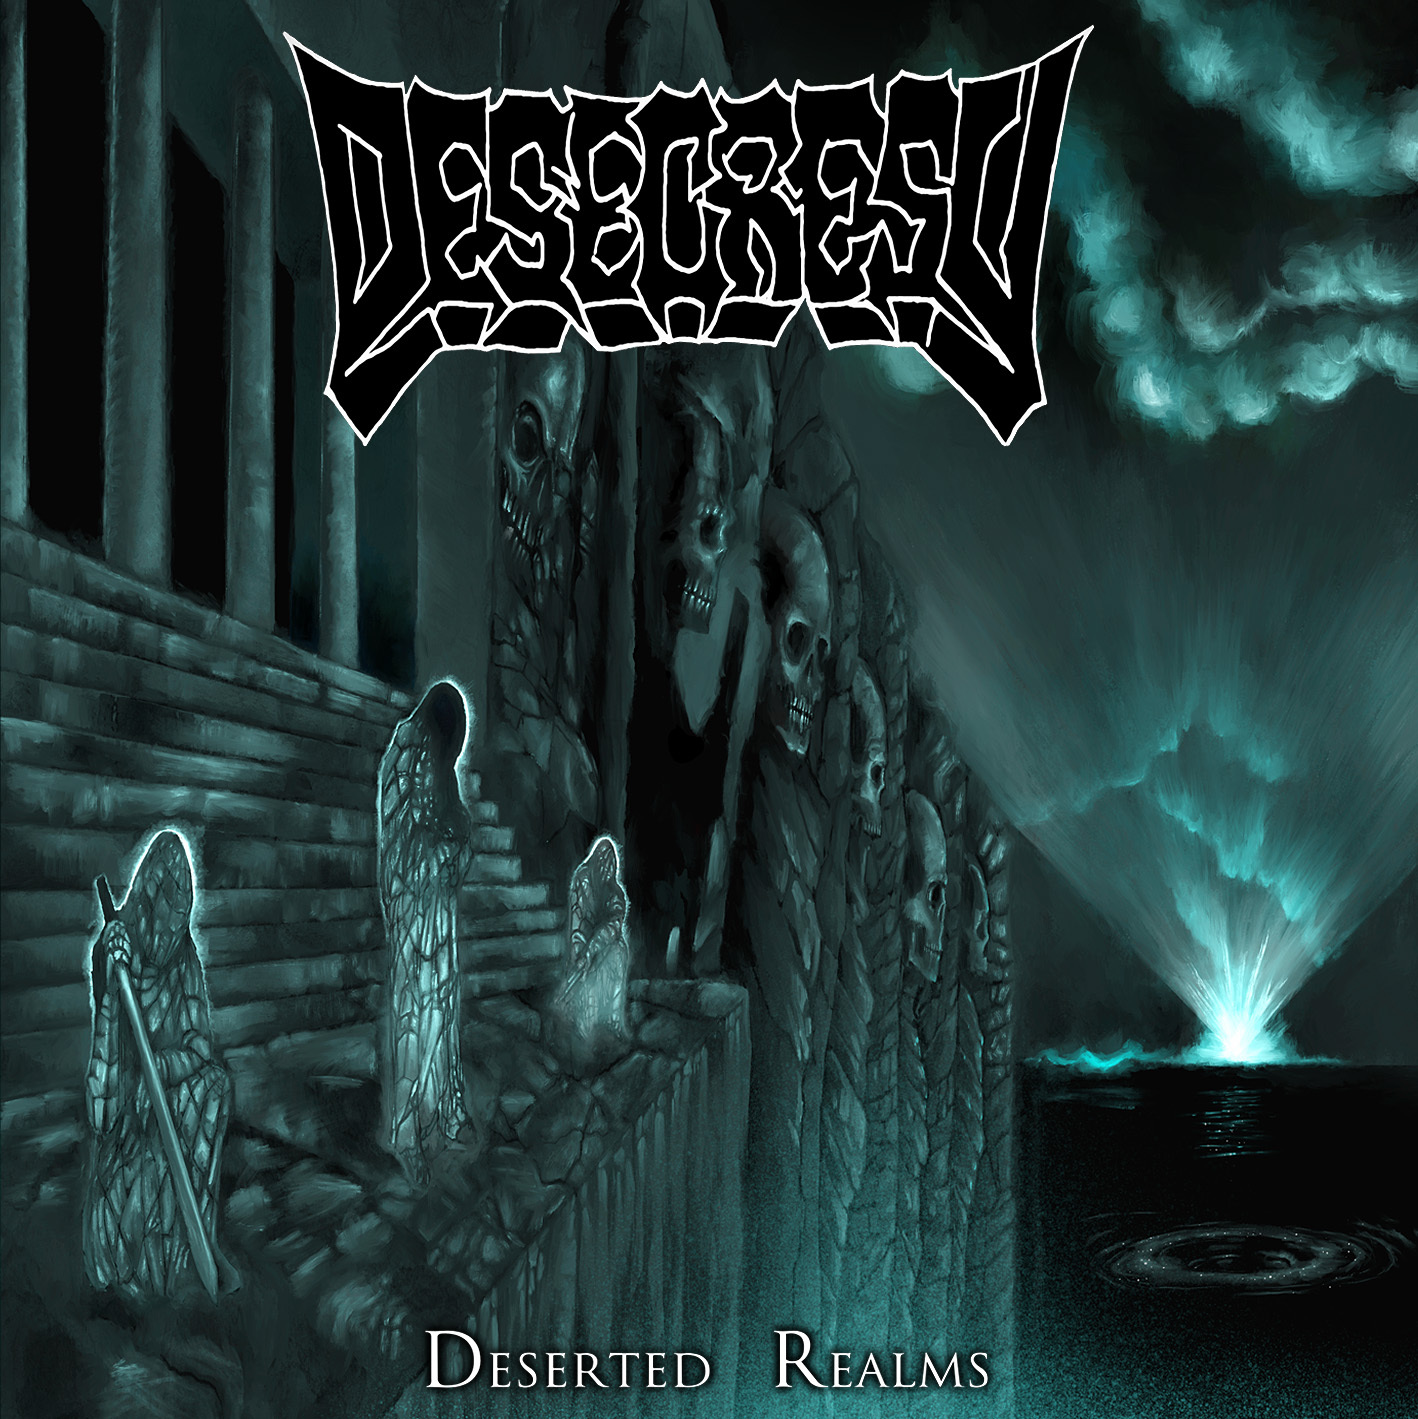 Desecresy_-_Deserted_Realms_12x12cm